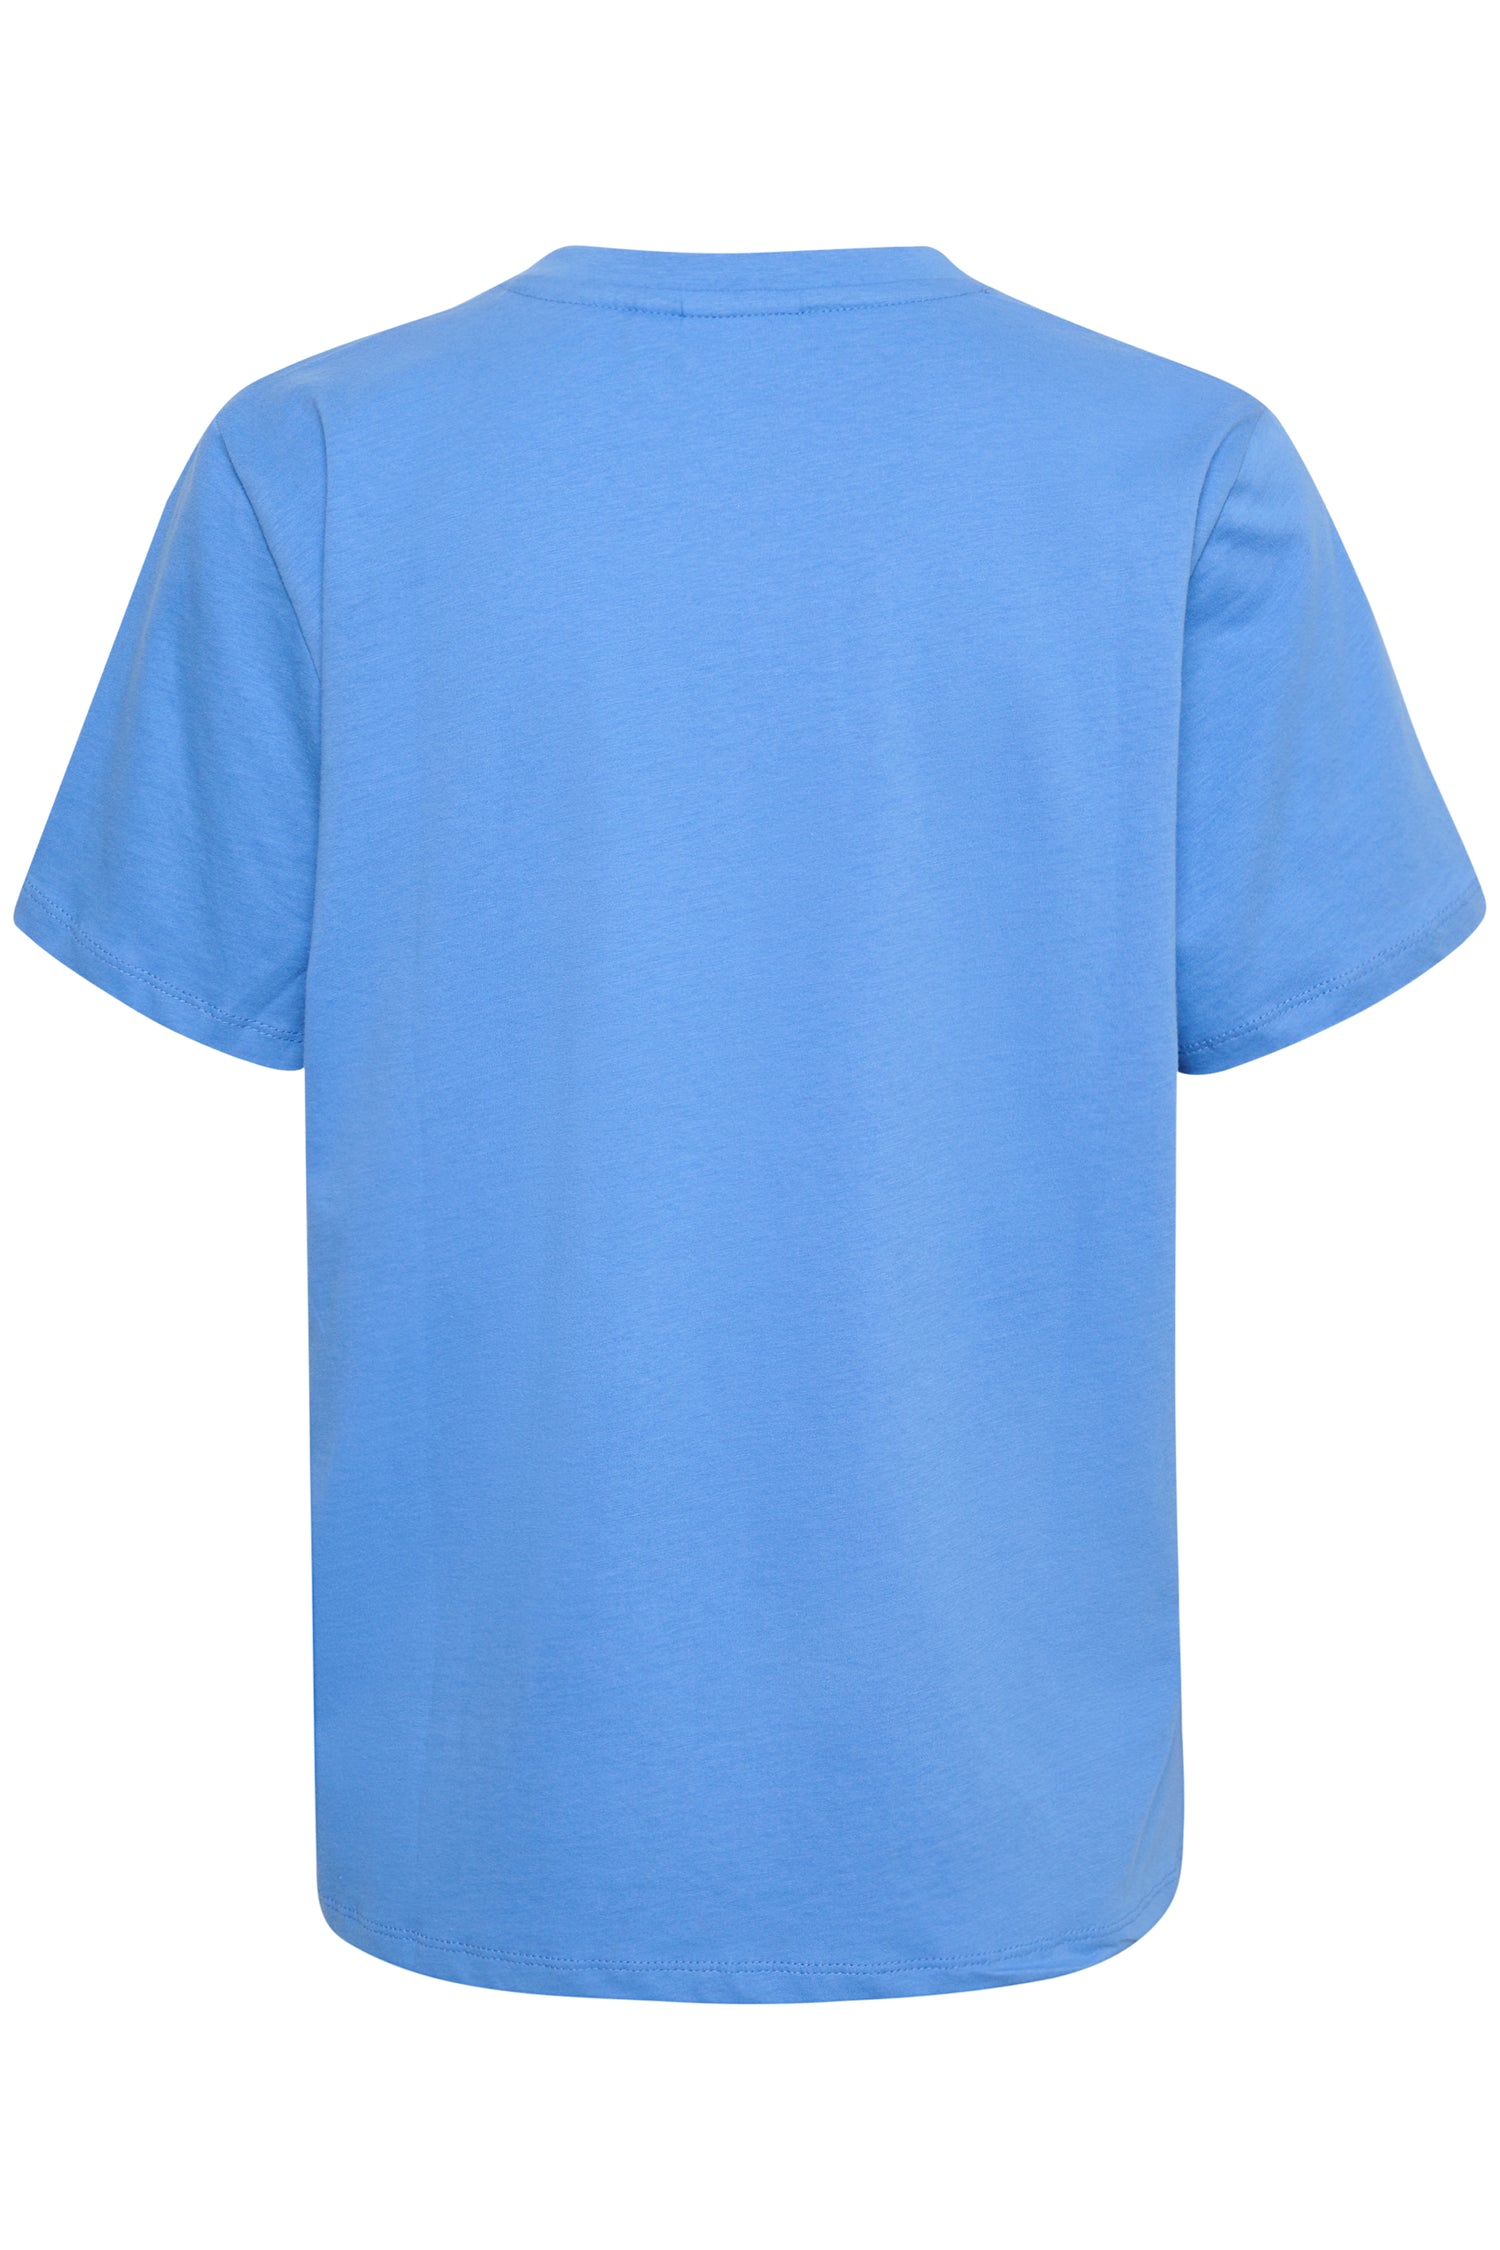 Saint Tropez Dajlii T-Shirt Ultramarine